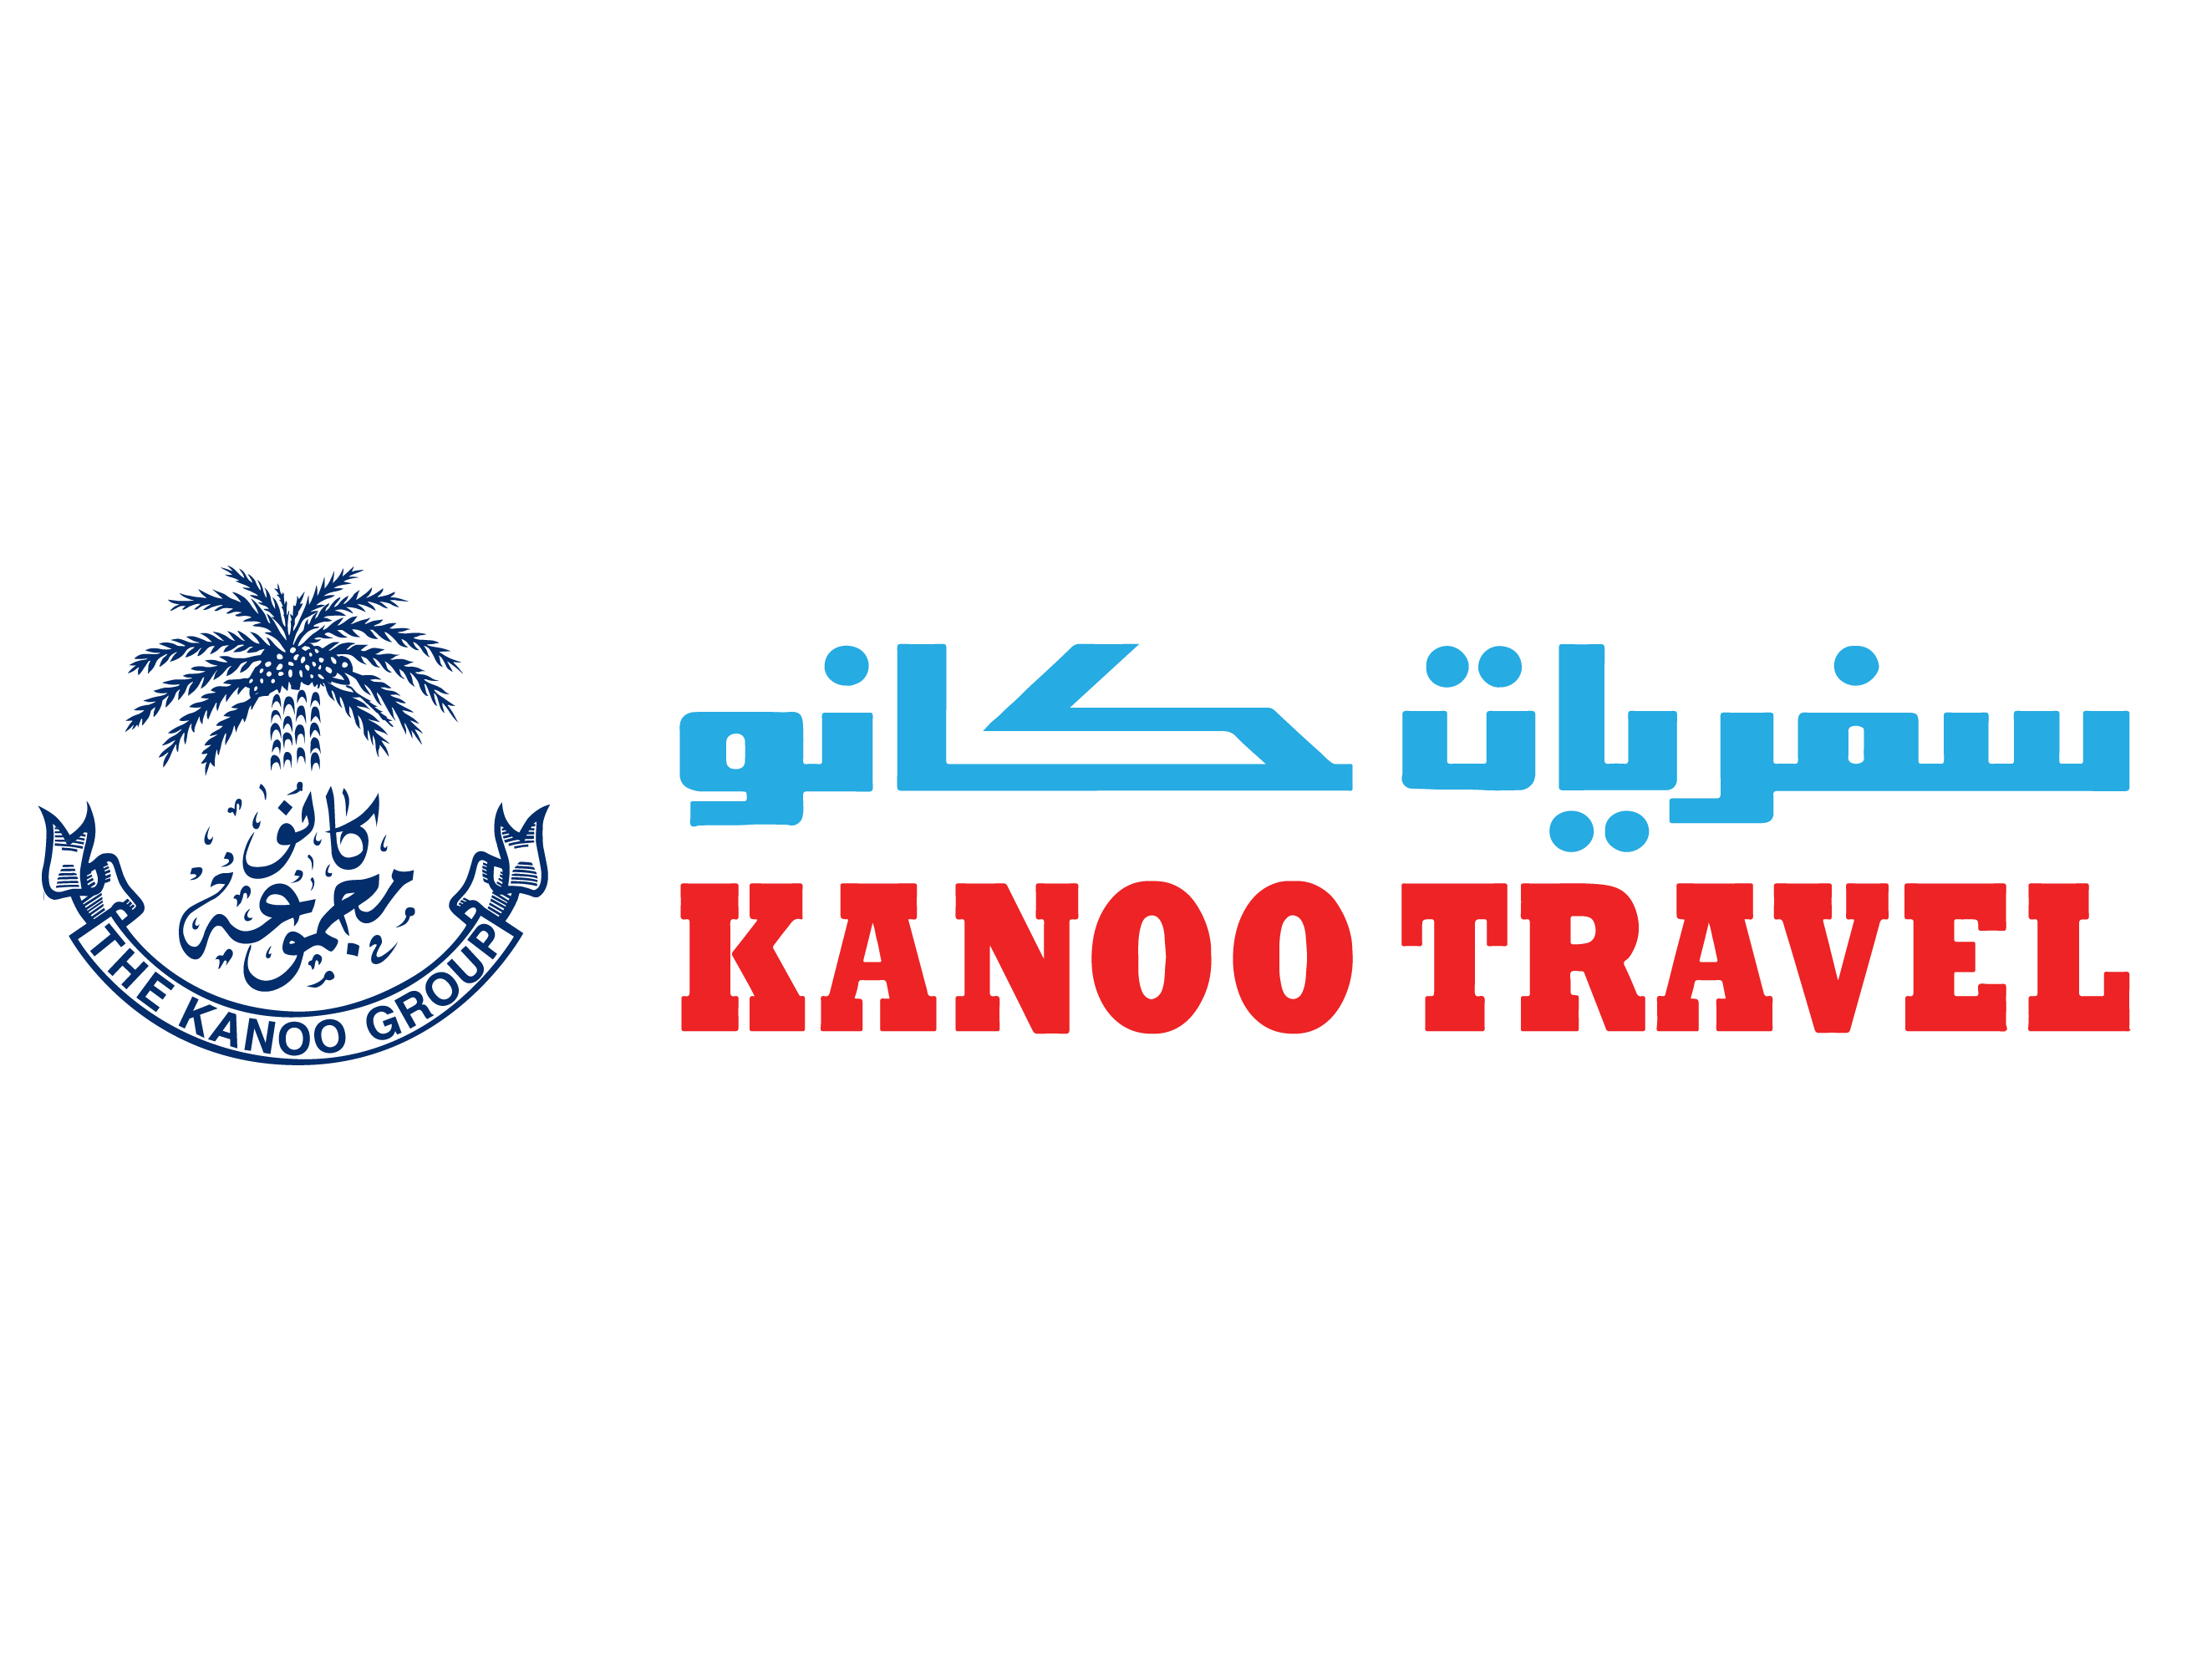 DynCorp Logo - Kanoo Travel logo | DynCorp International